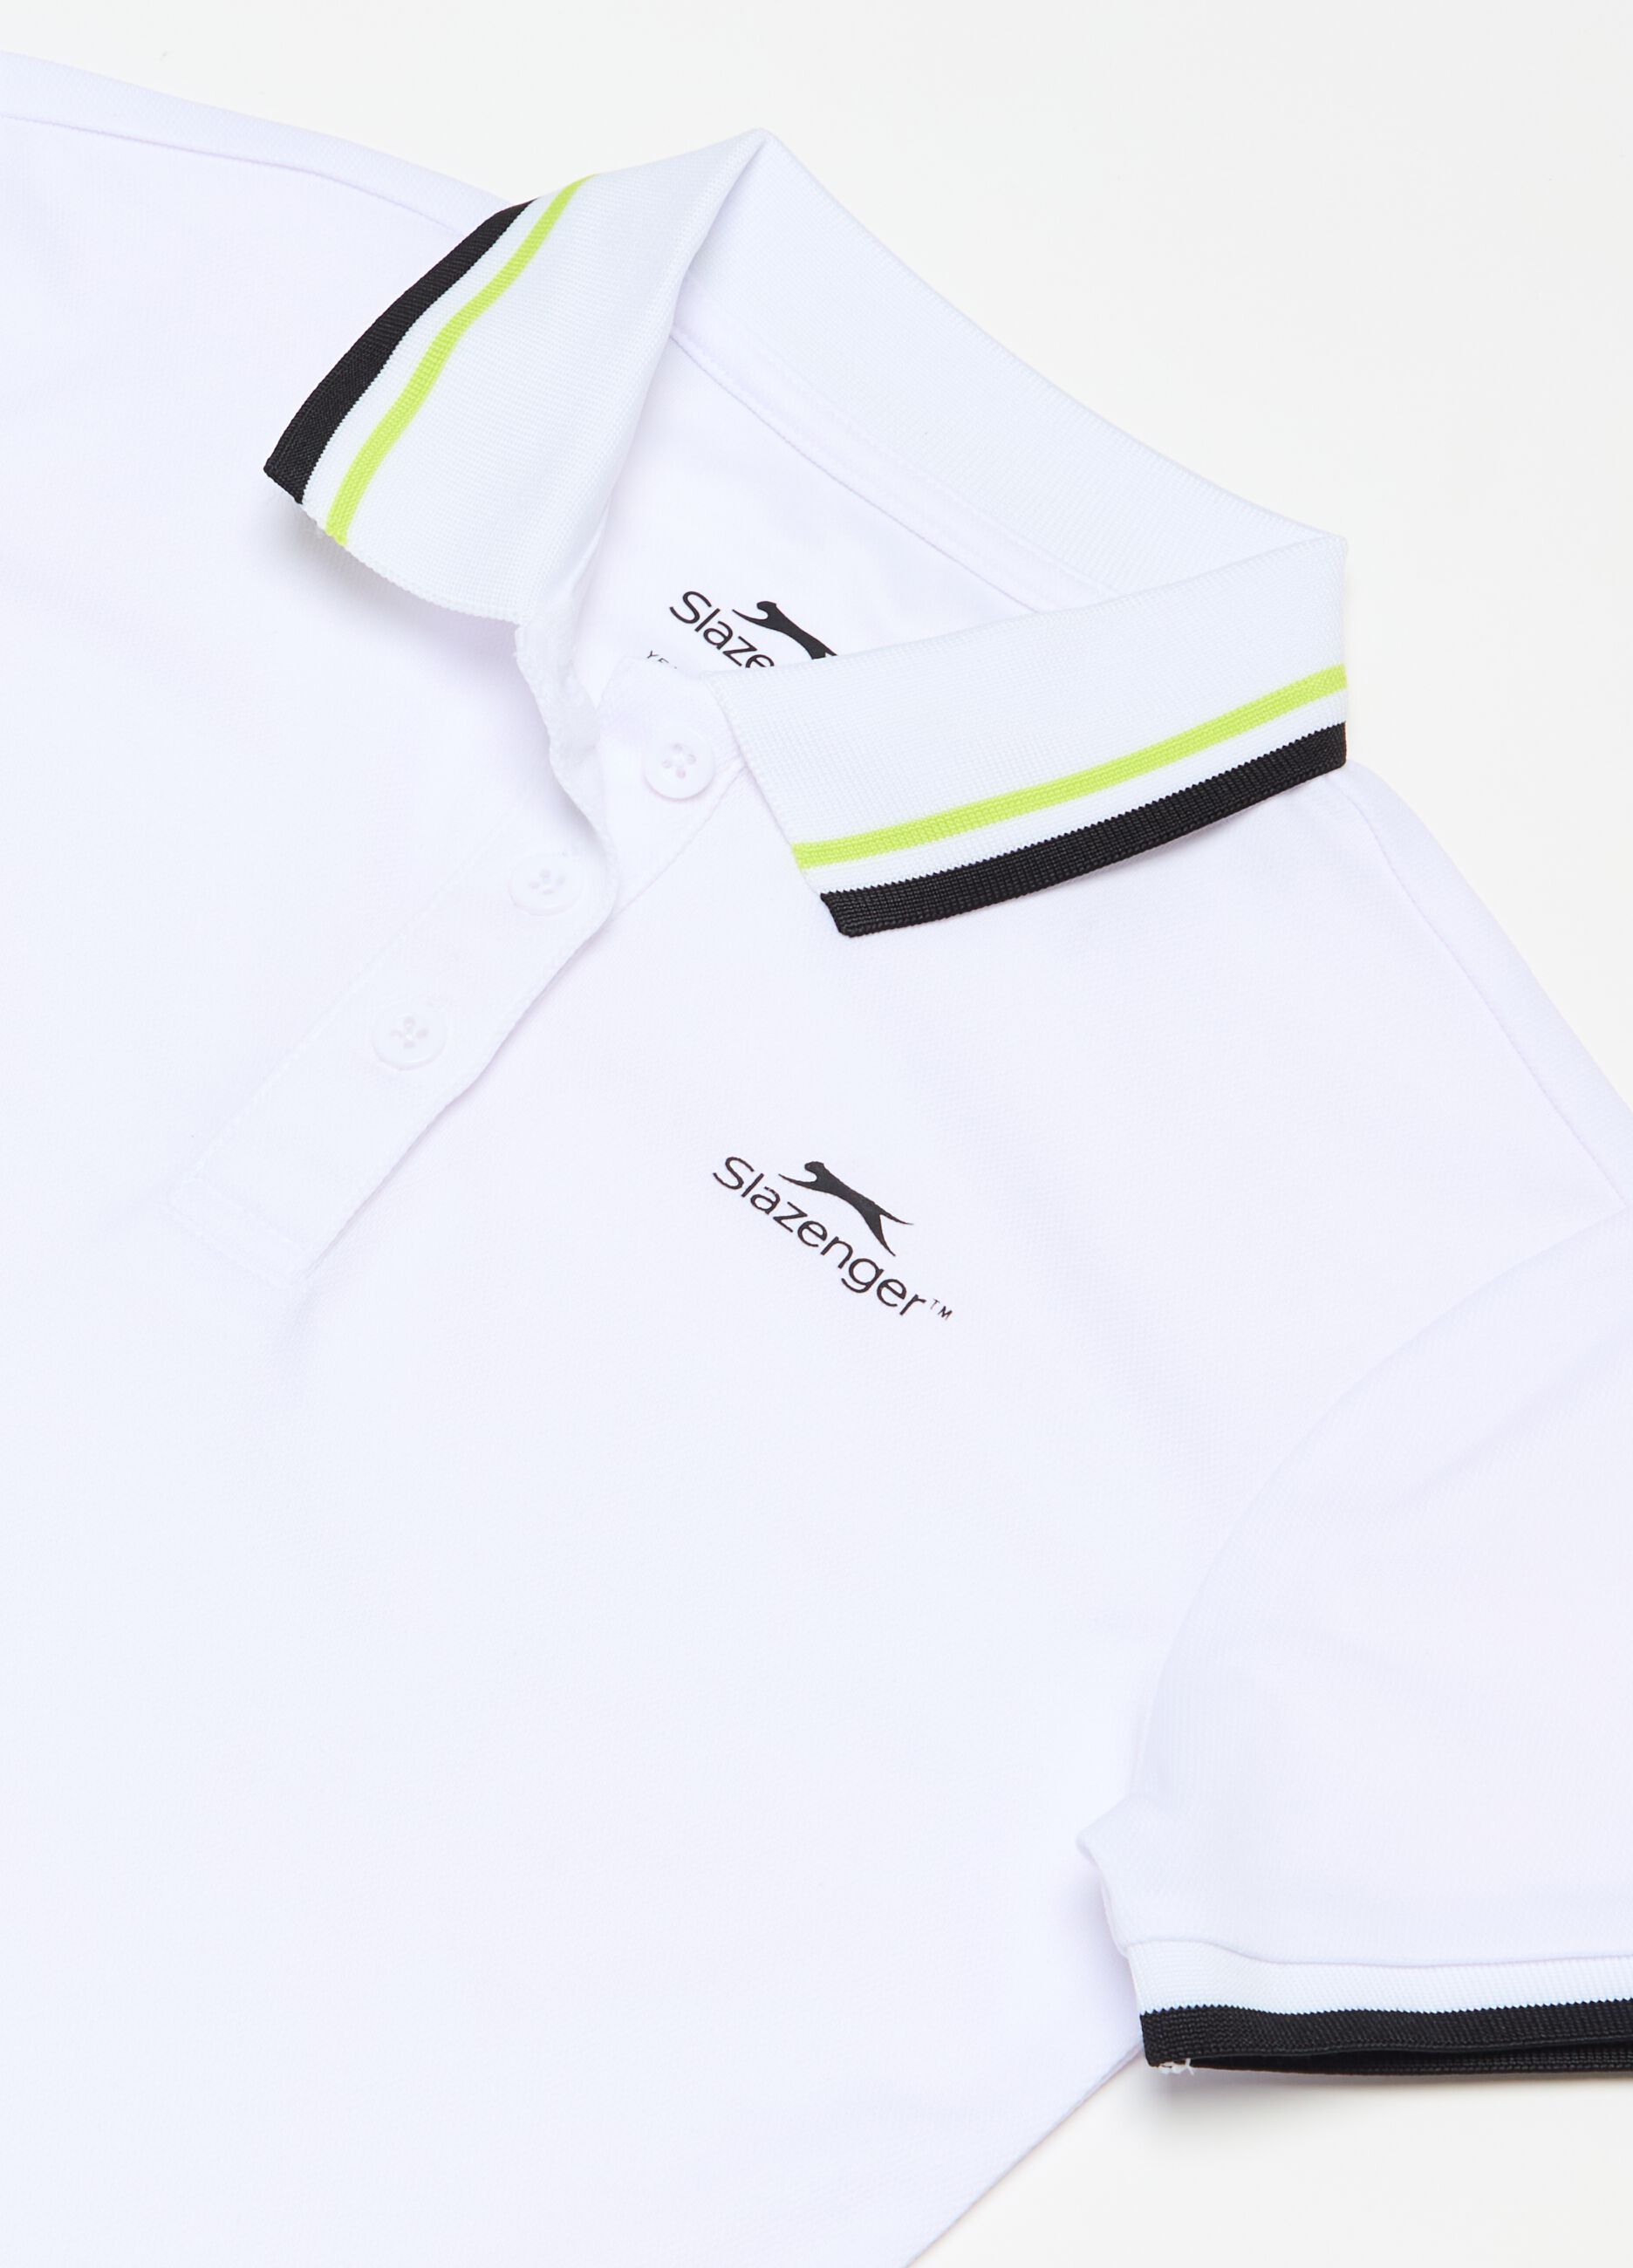 Slazenger quick-dry tennis polo shirt